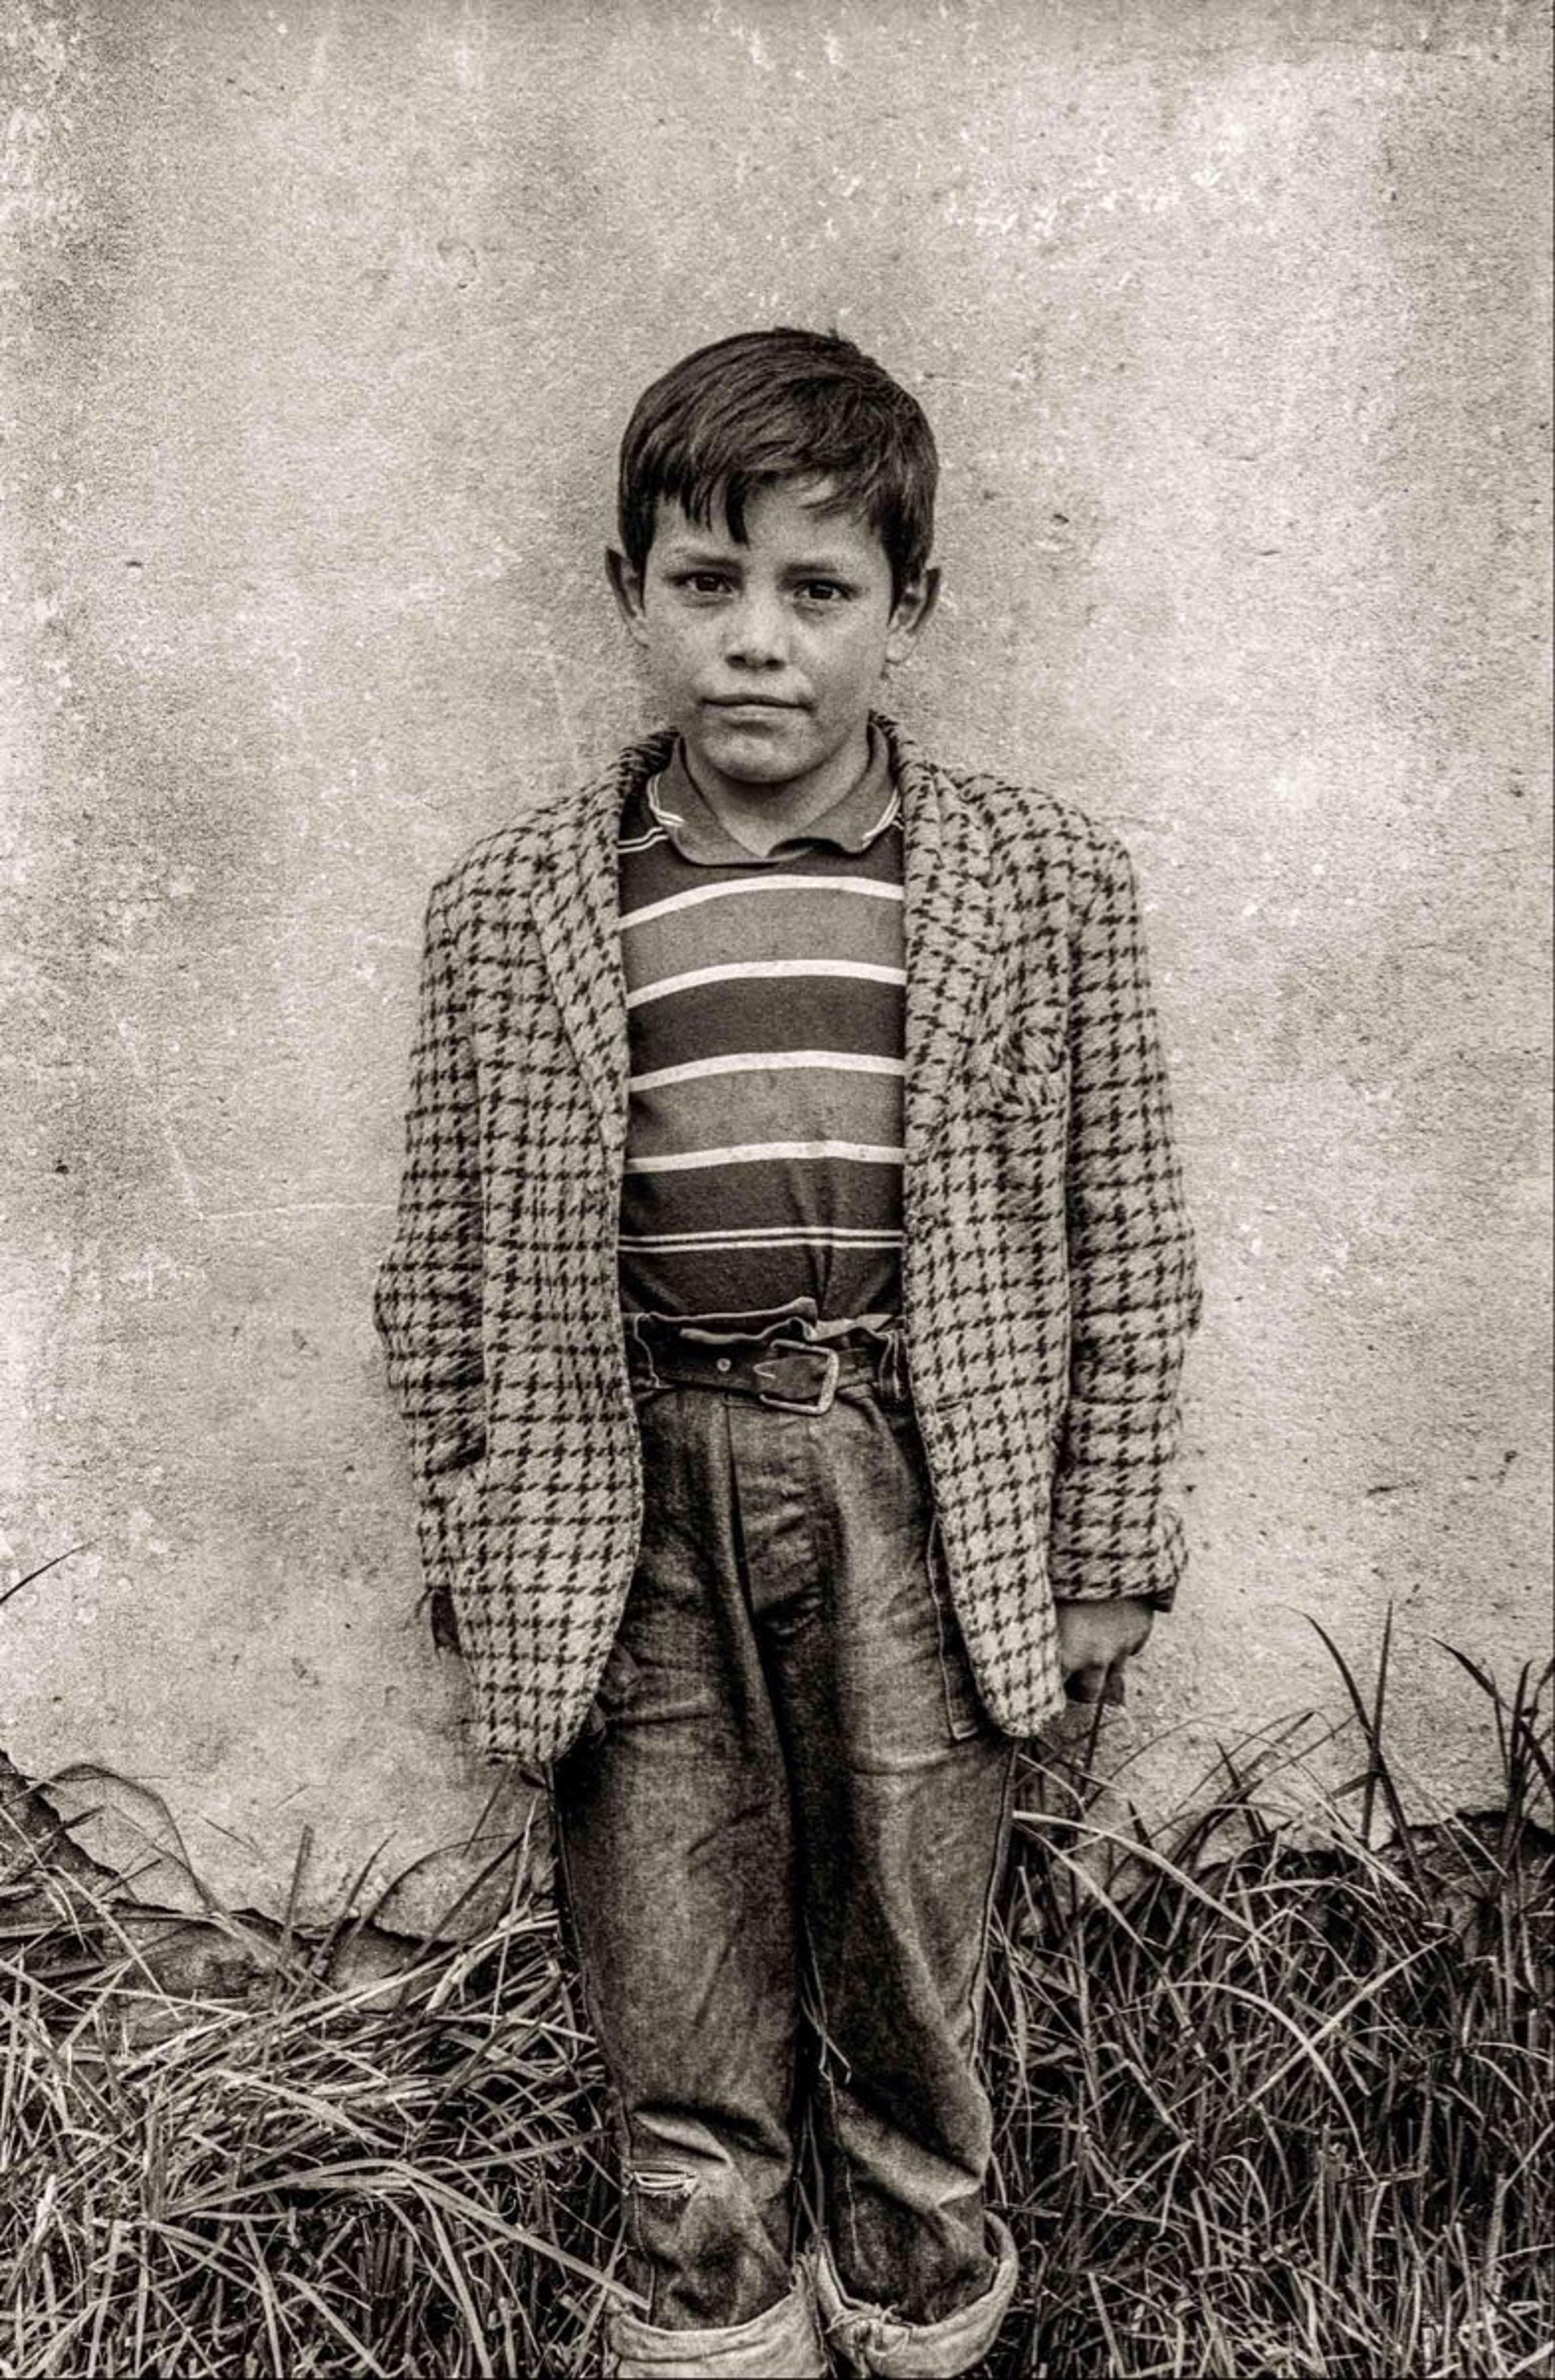 Boy In Striped Shirt & Jacket, Unframed (034) by Jack Dempsey